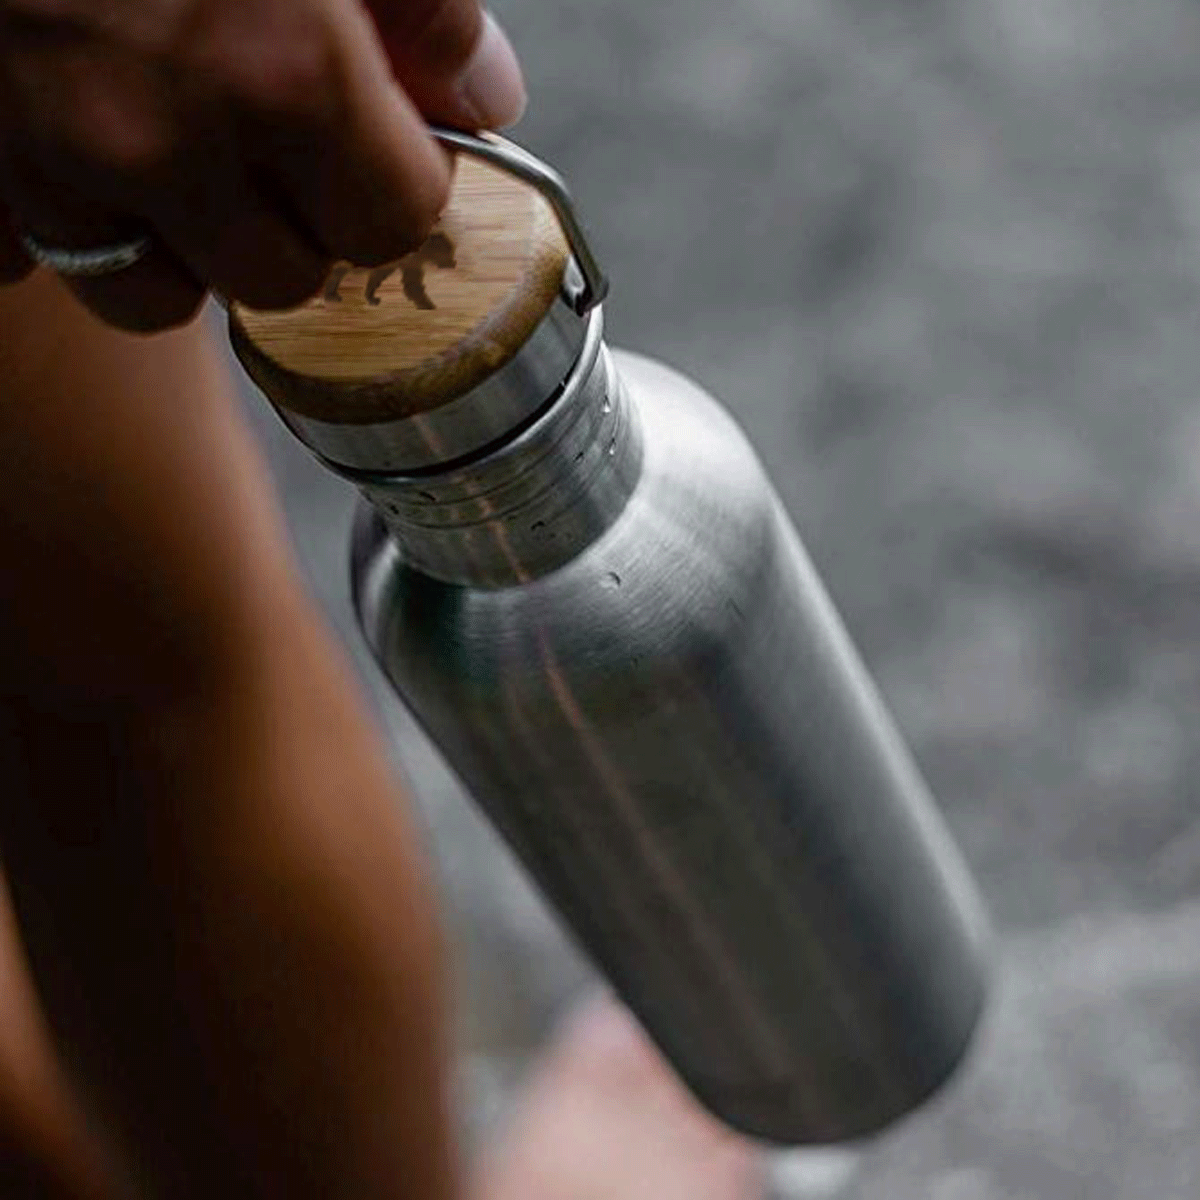 Stainless steel water bottle being held